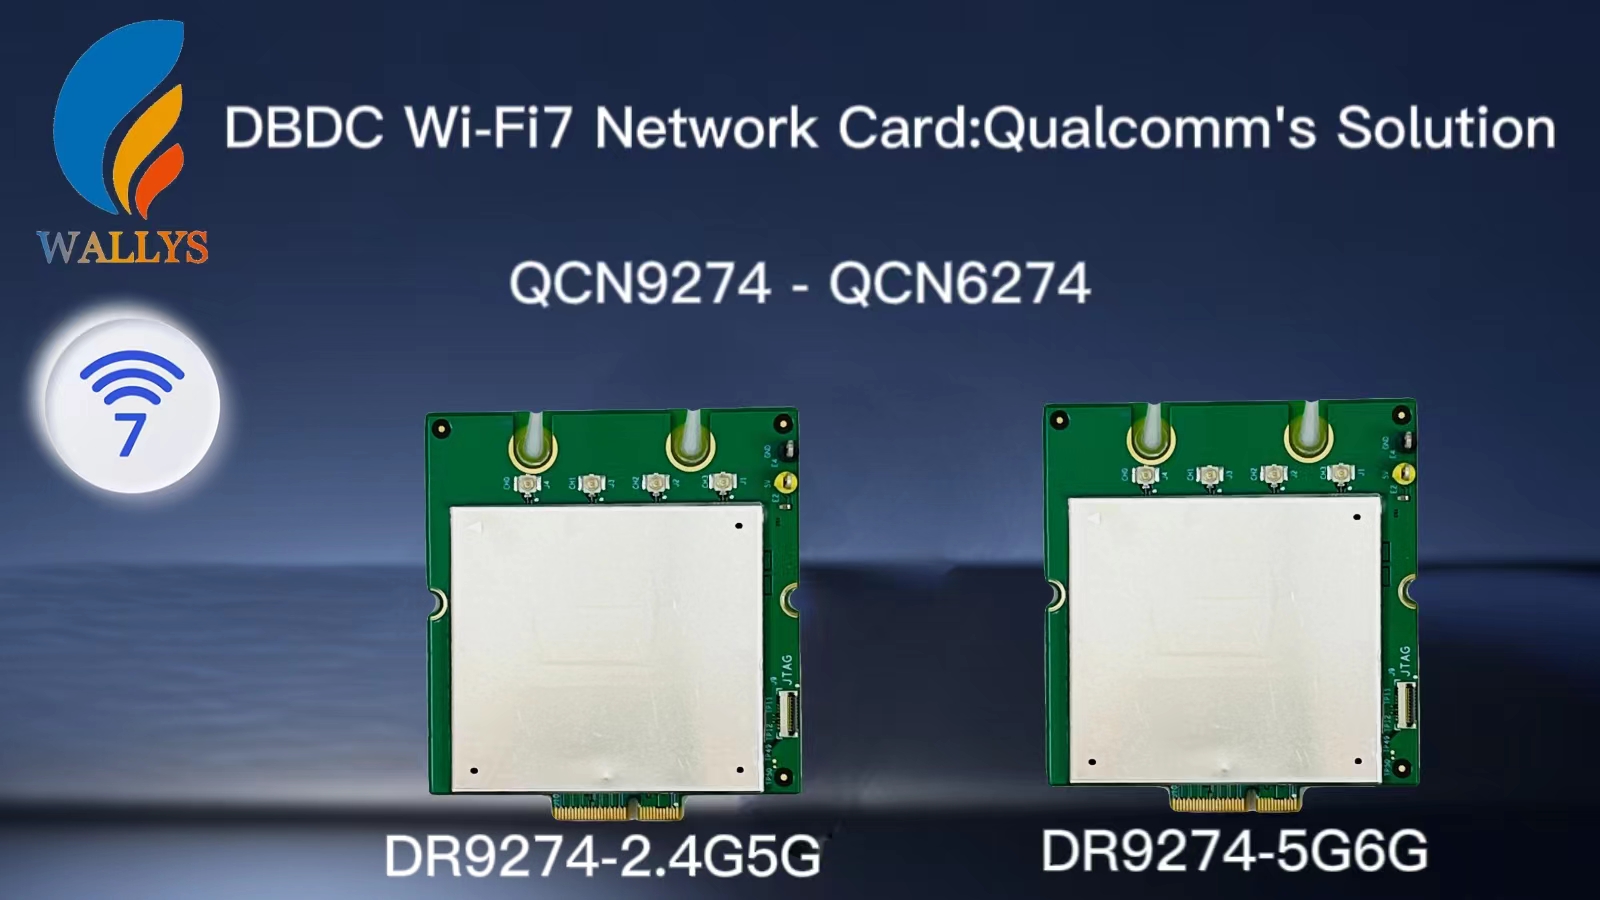 QCN9274|DBDC WiFi 7 Network Card: Qualcomm’s Innovative Solution